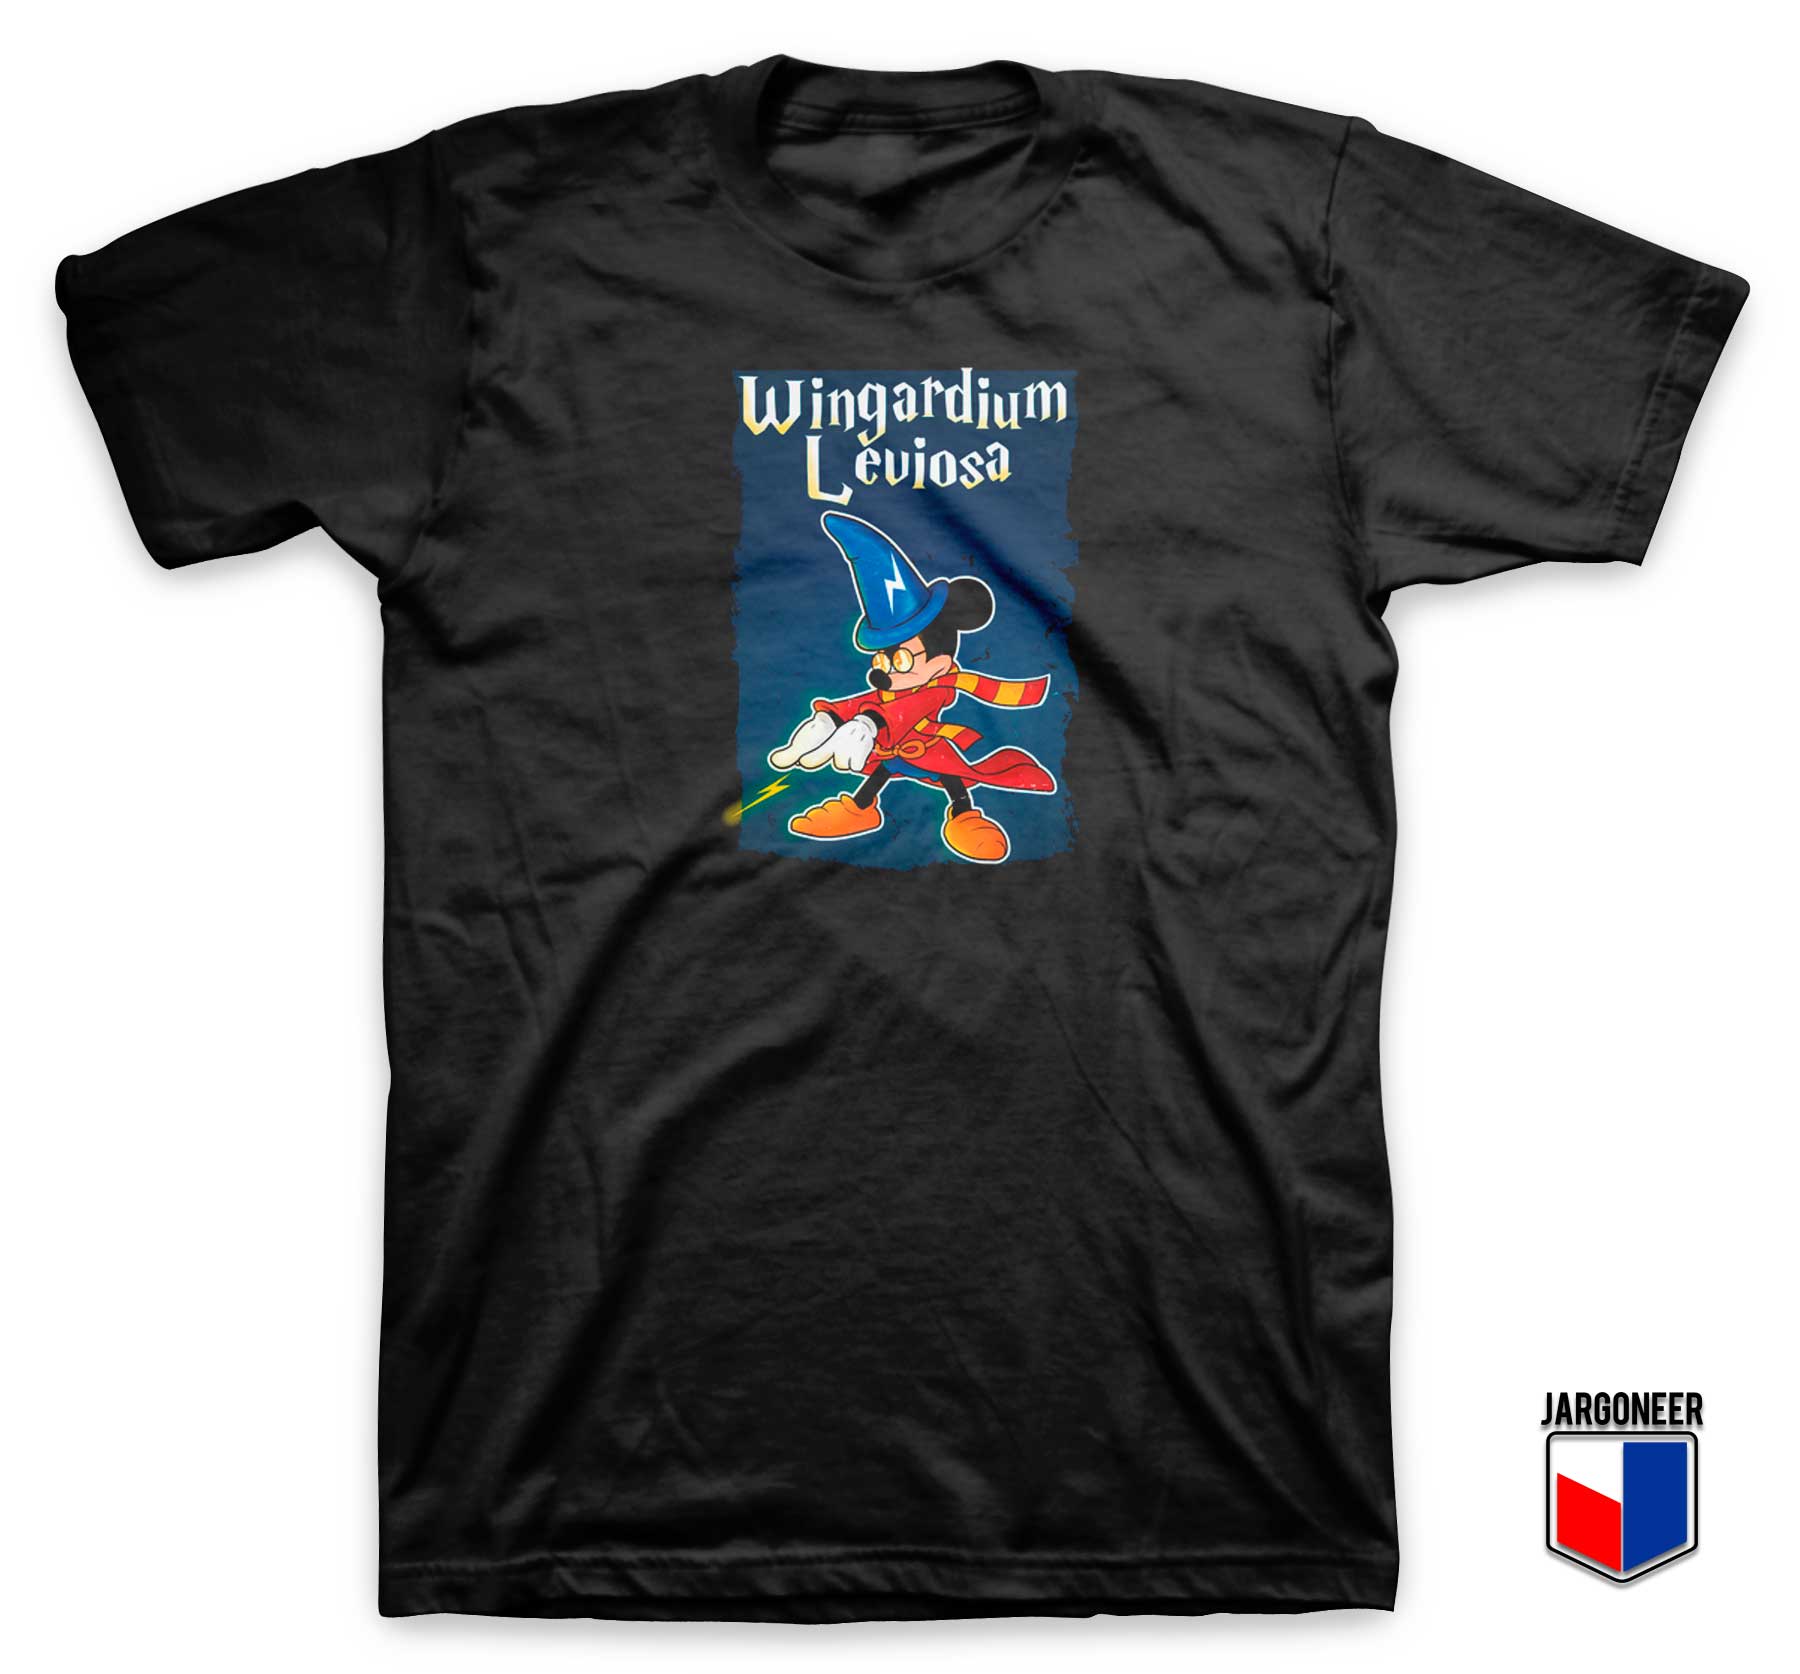 Mickey Wingardium Leviosa T Shirt - Shop Unique Graphic Cool Shirt Designs